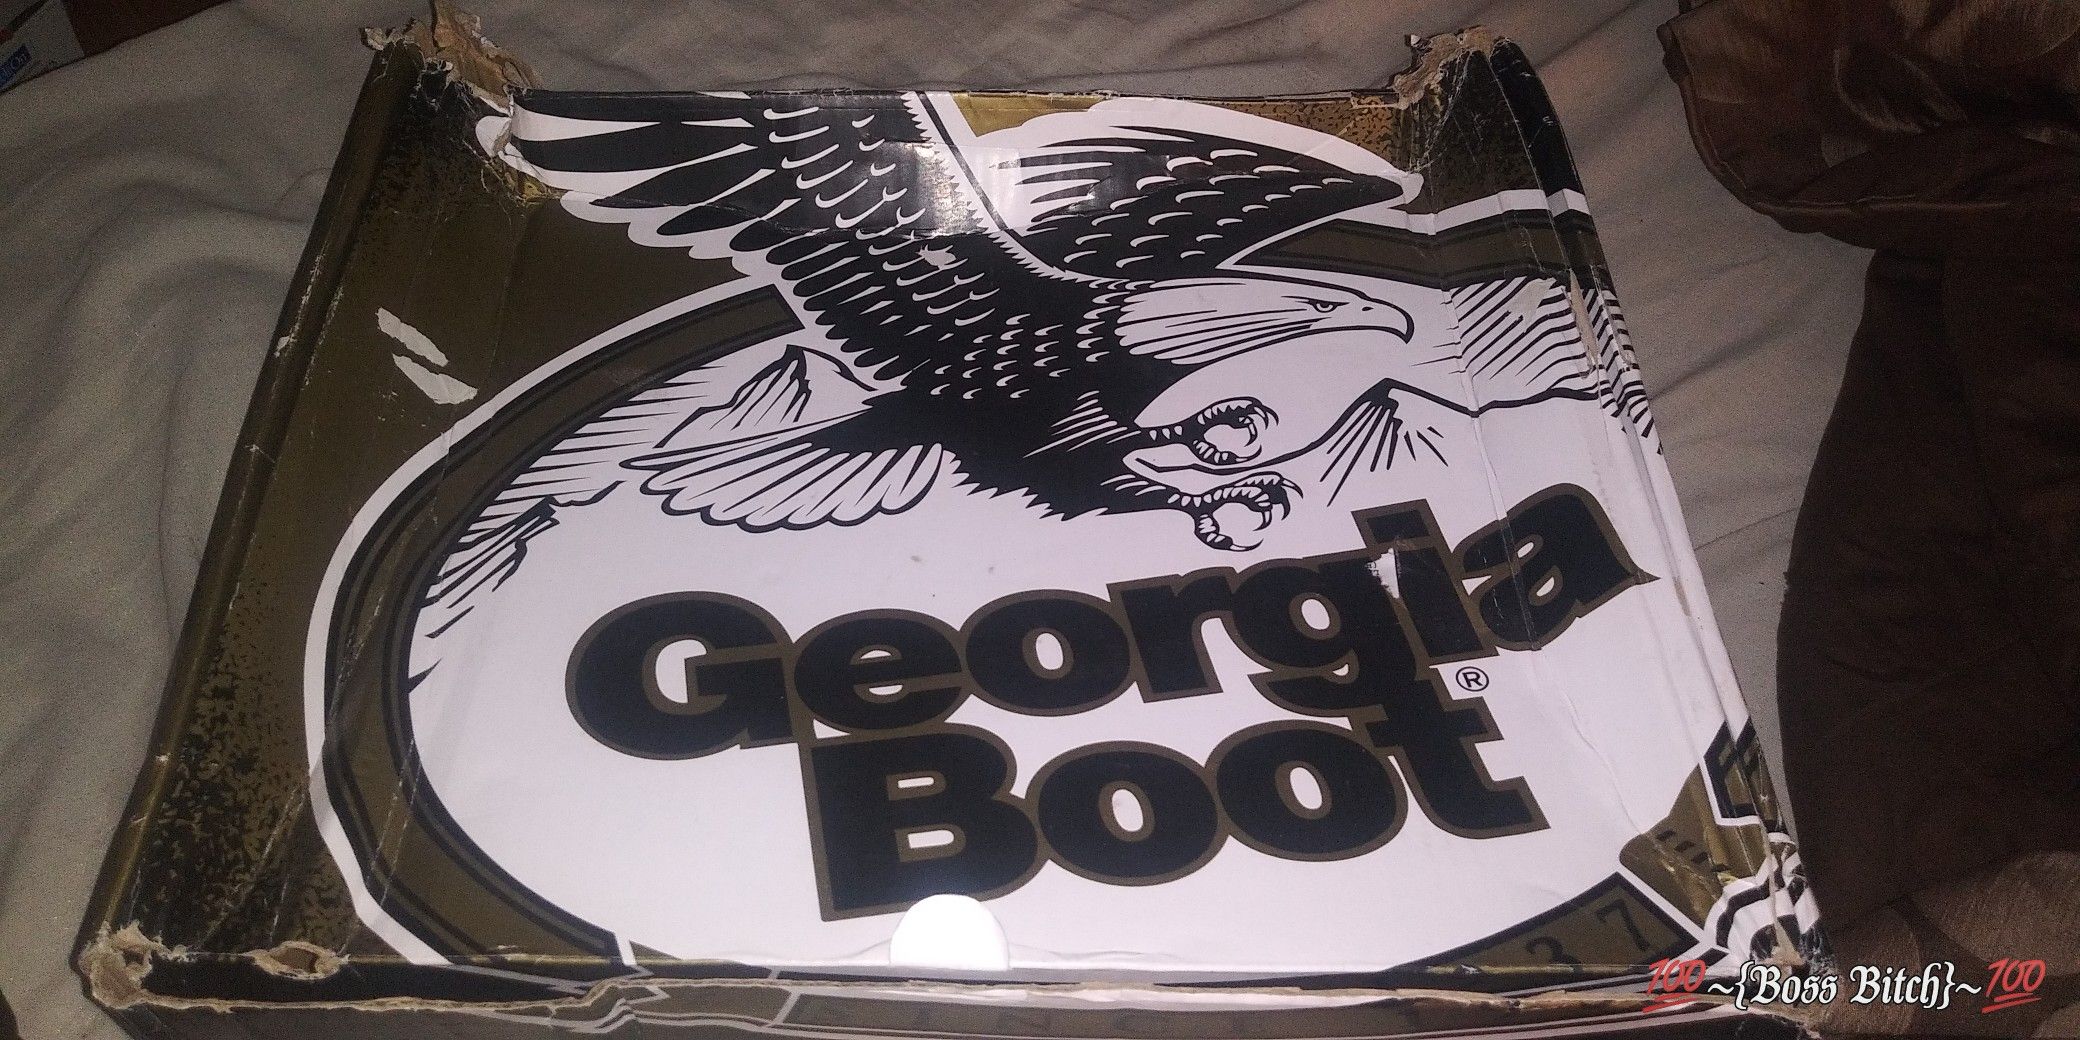 Men's georgia boots